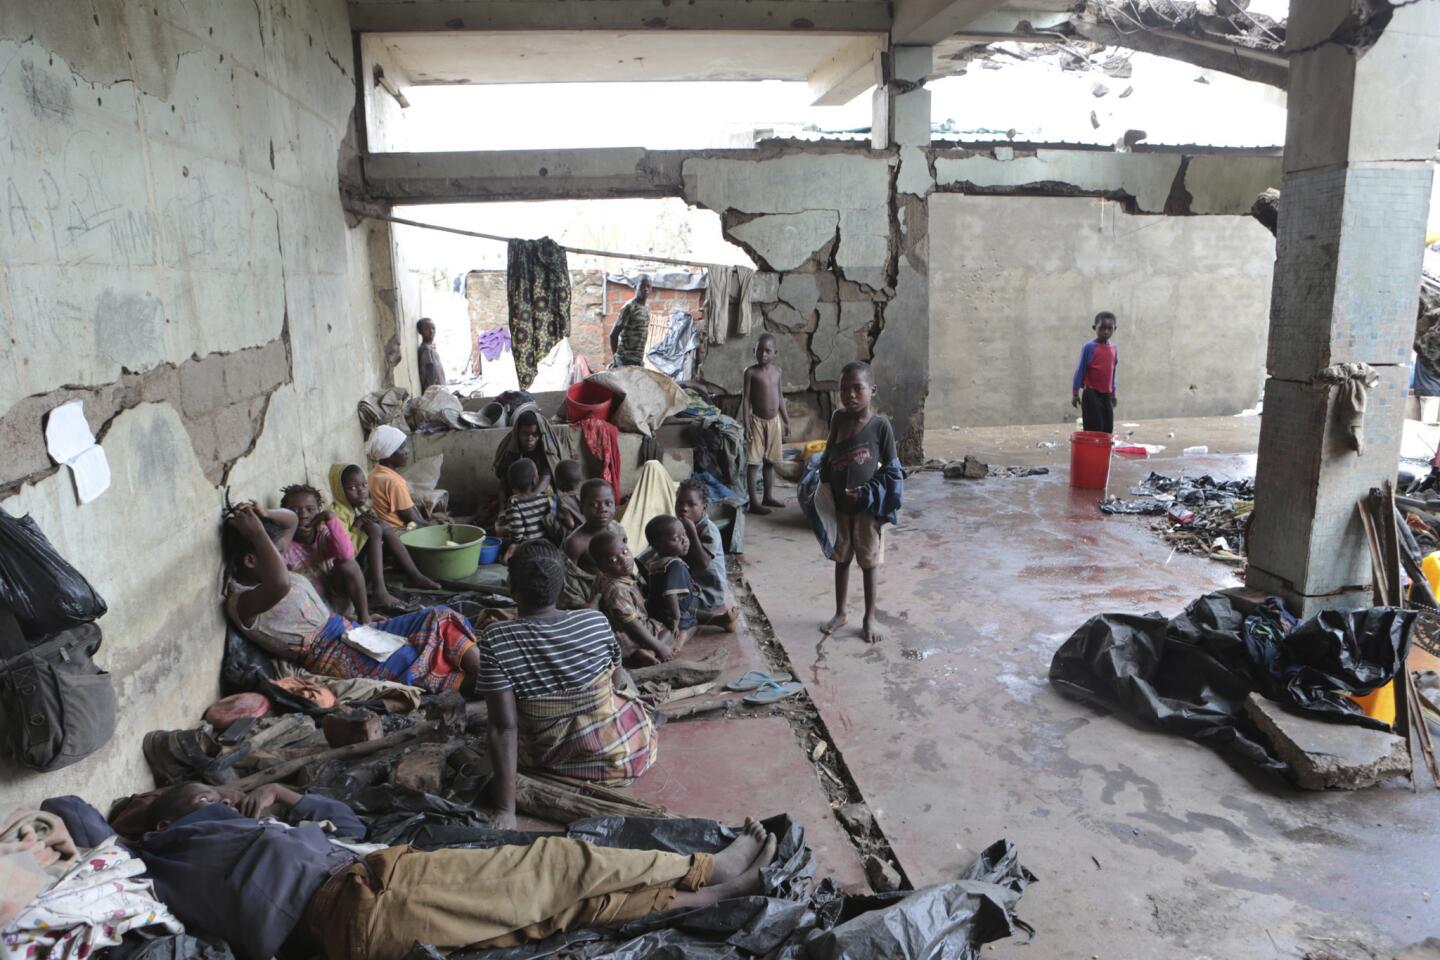 Sobrevivientes del ciclón Idai se refugian en un edificio abandonado cerca de Nhamatanda, a unos 50 kilómetros de Beira, Mozambique, el viernes 22 de marzo de 2019. (AP Foto/Tsvangirayi Mukwazhi)